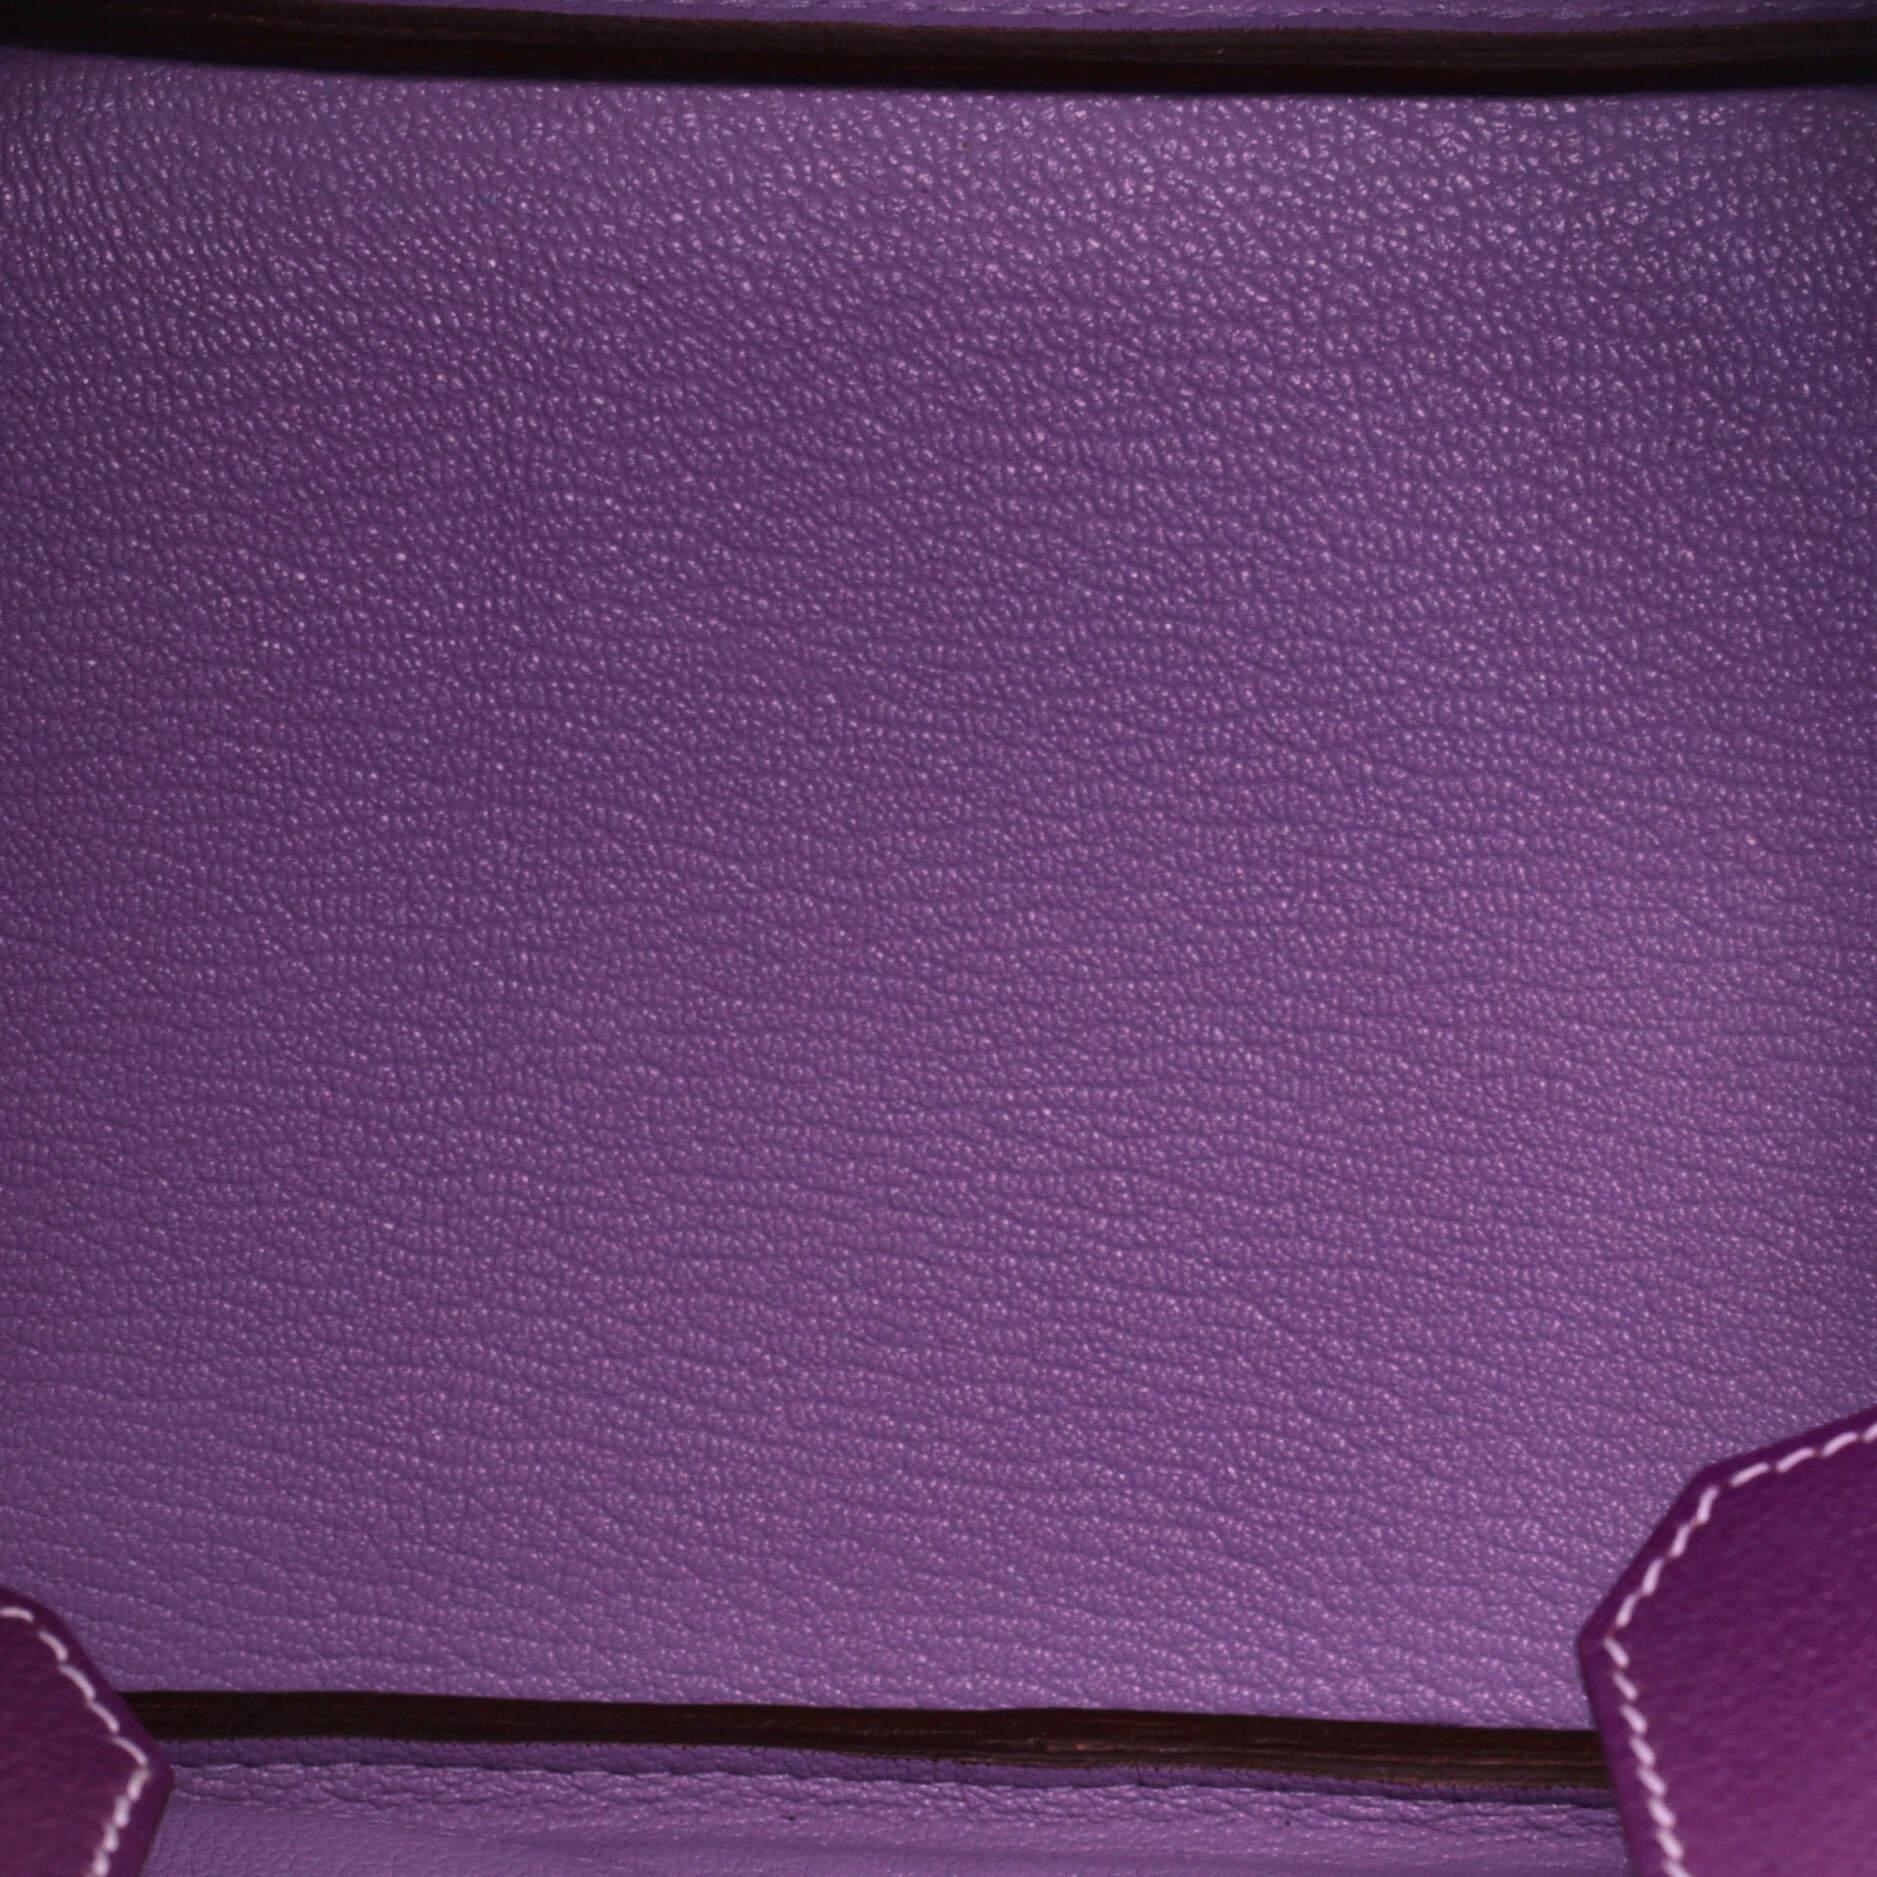 Pink Hermes Birkin Handbag Tricolor Chevre Coromandel with Gold Hardware 30